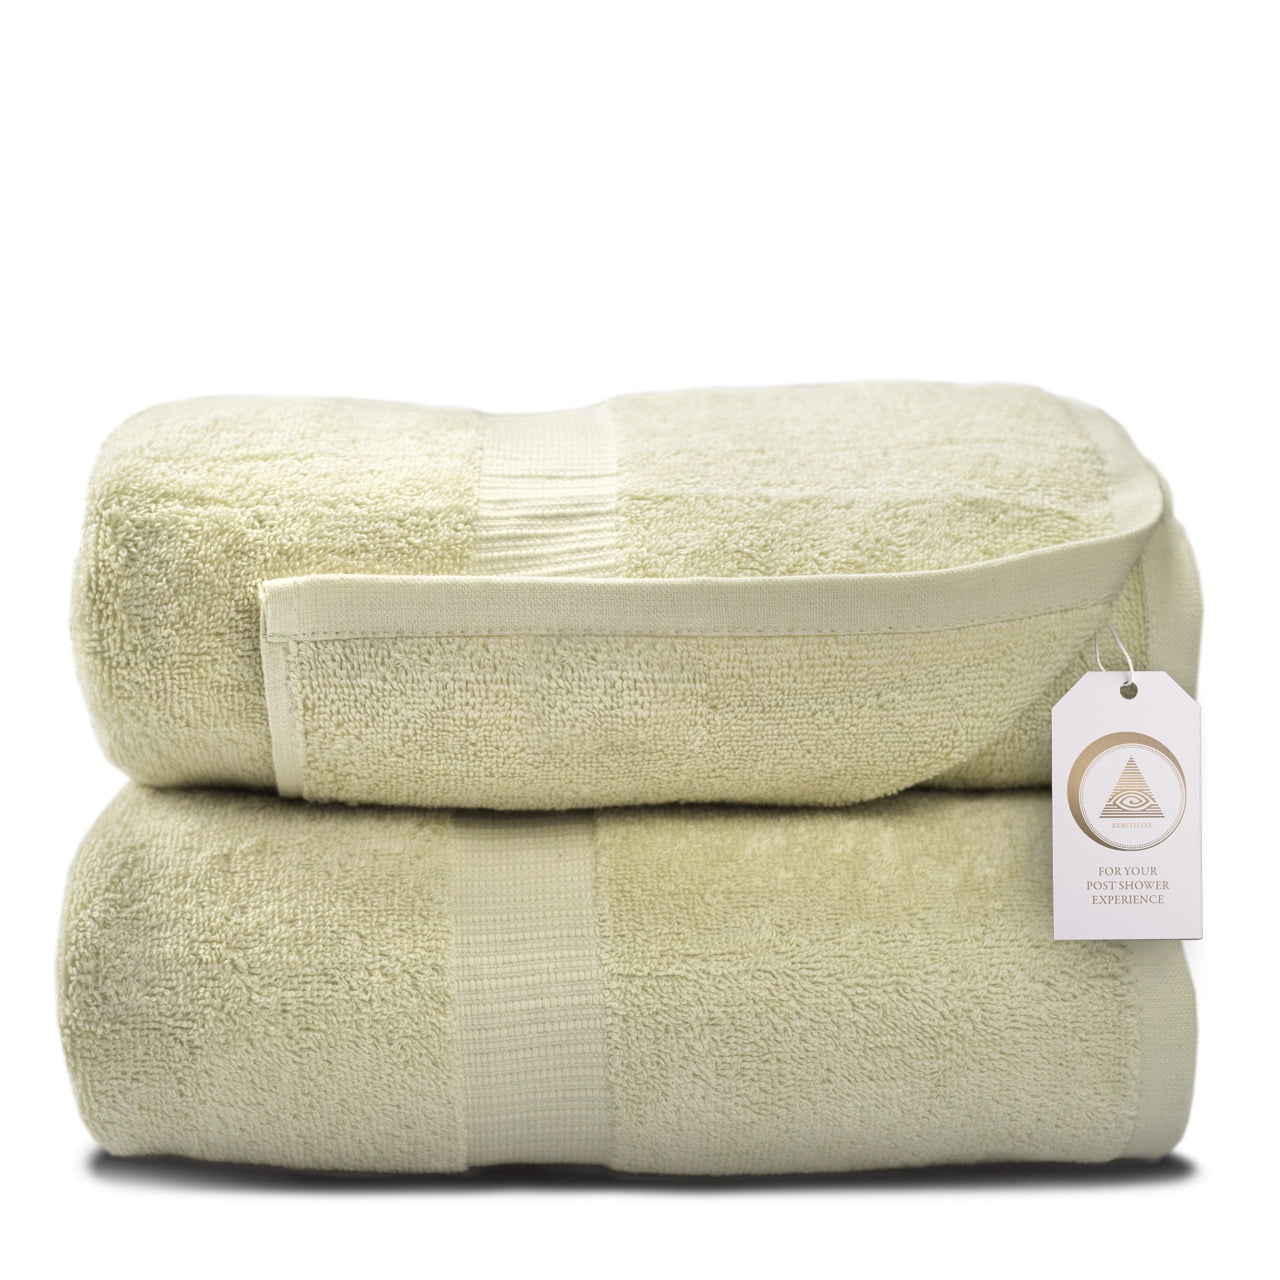 Zenith Luxury Bath Sheet towels - Extra Large Bath Towel 40 X 70, Beach  Towels, 600 GSM, Oversized Bath Towel, XL Bath Towel ,100% Cotton 